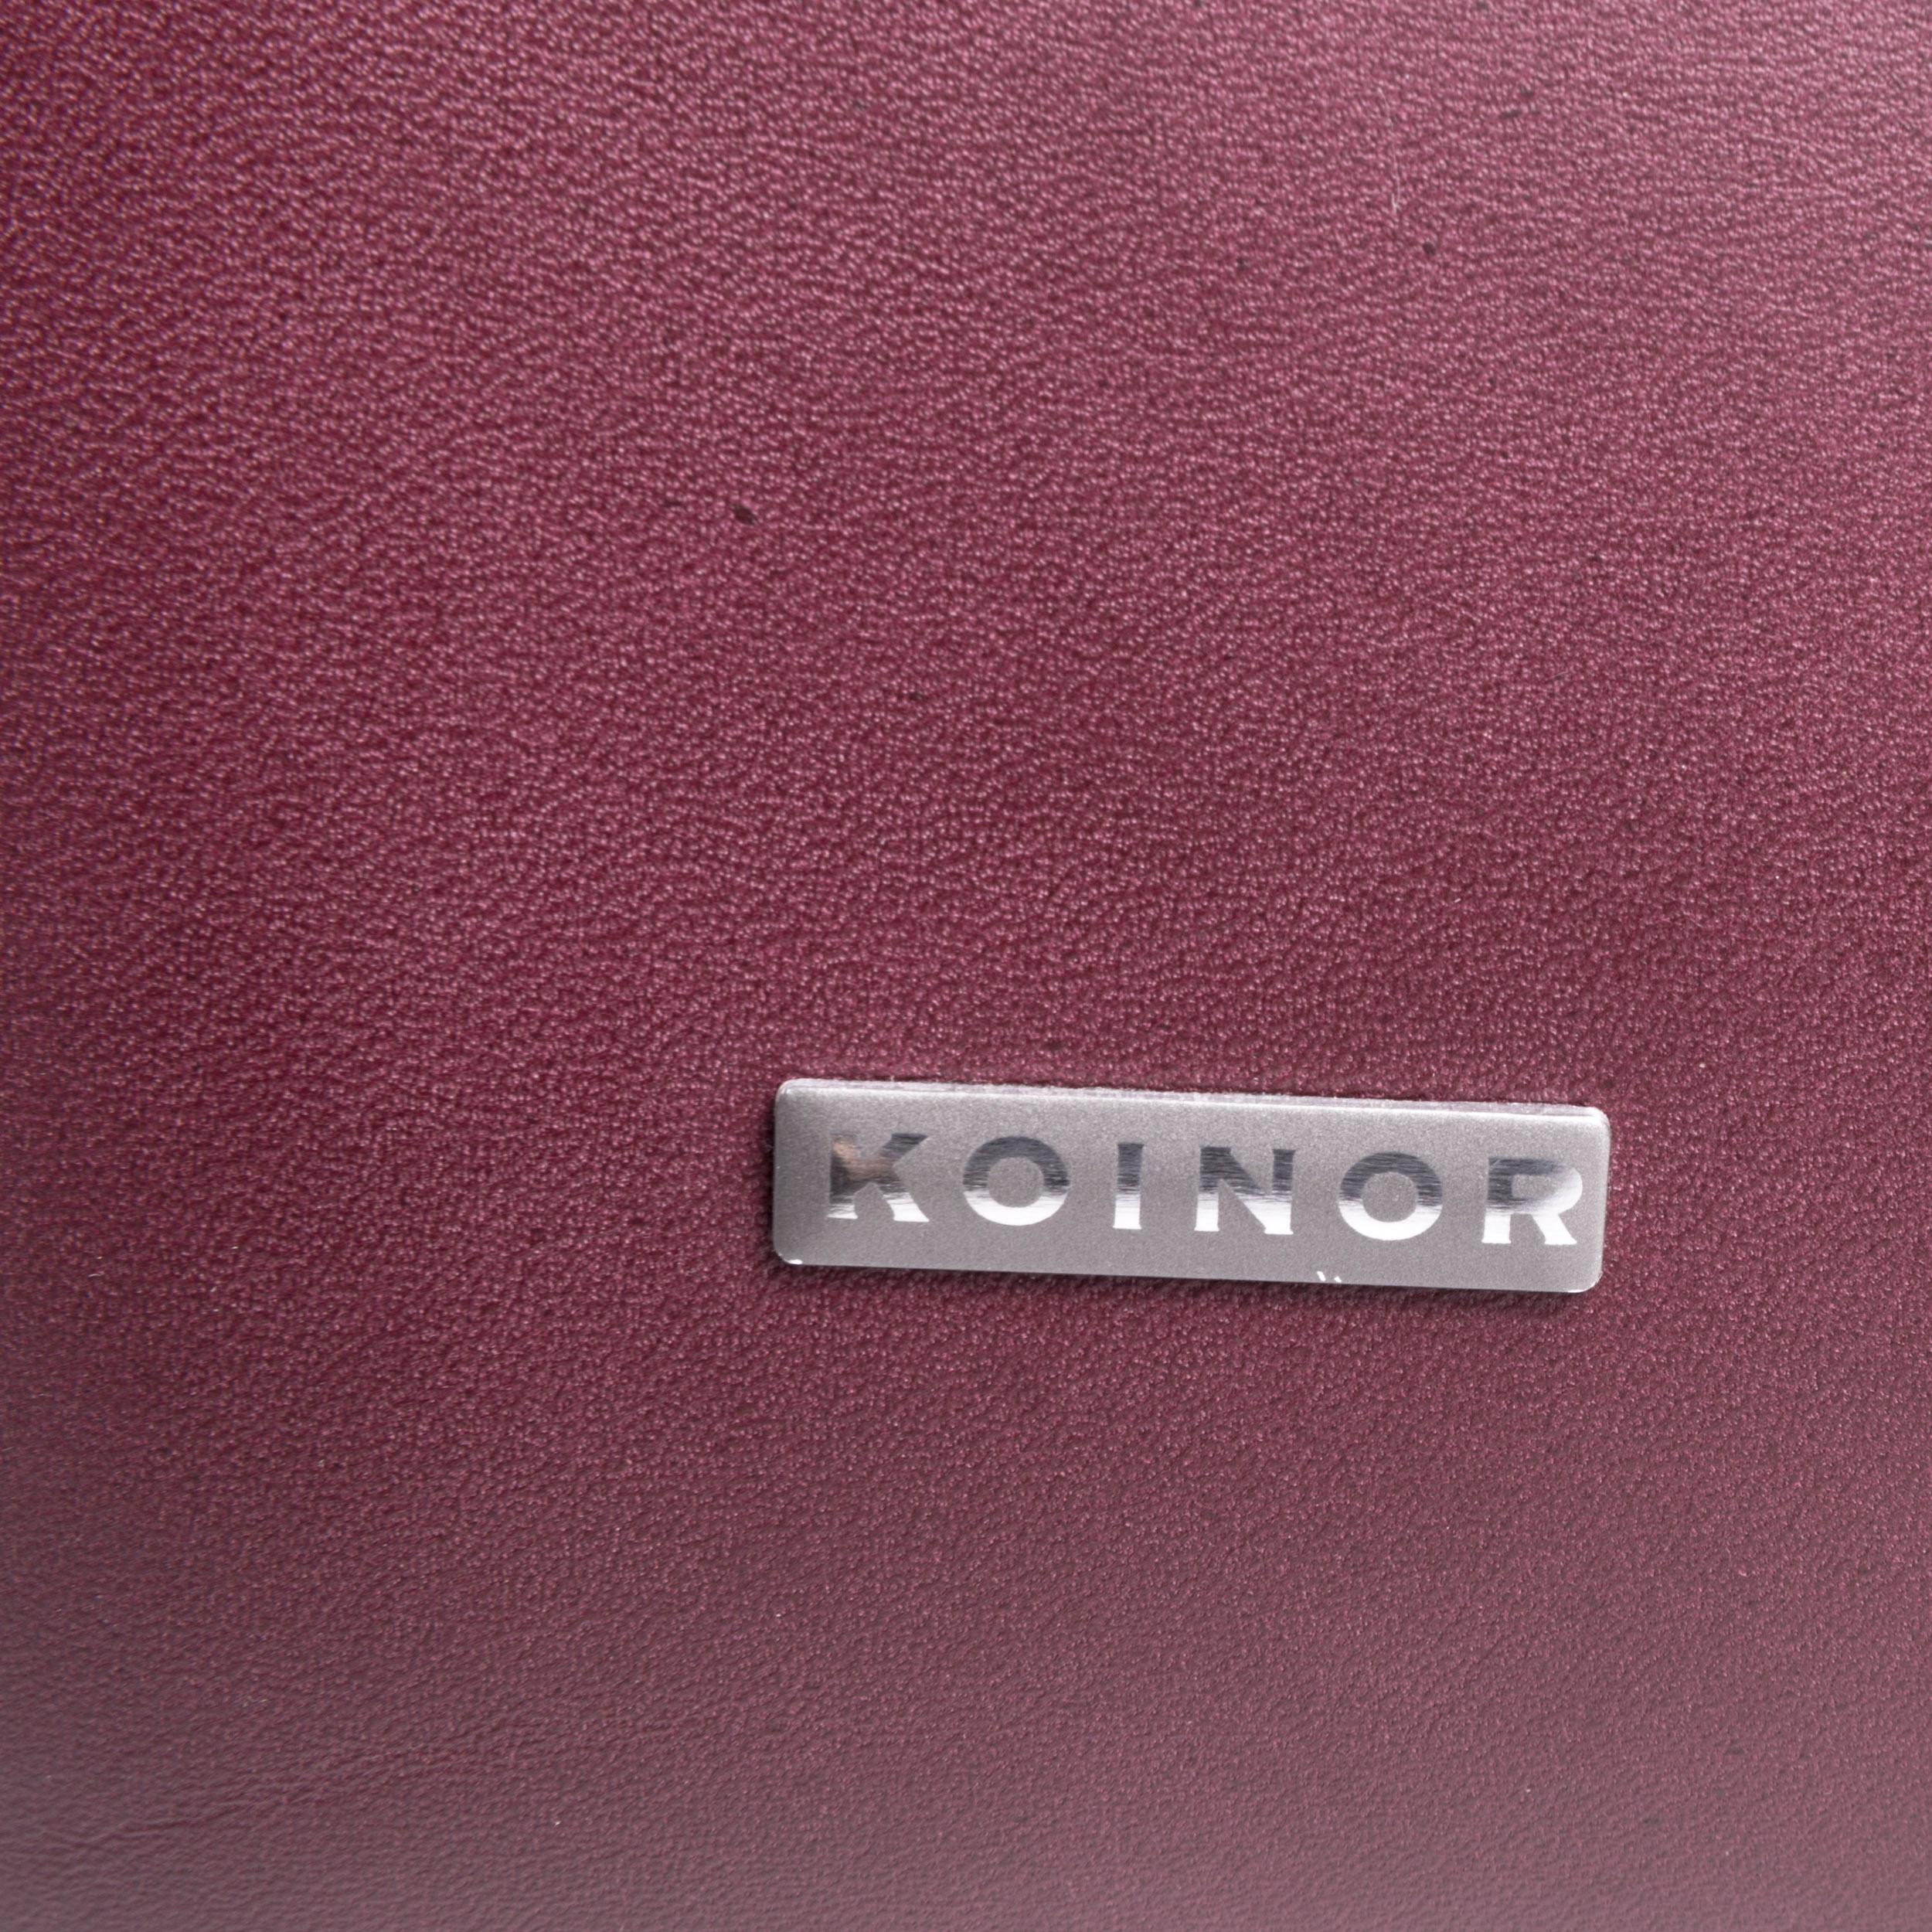 Koinor Rivoli Designer Leather Sofa Purple Genuine Leather Two-Seat Couch For Sale 2